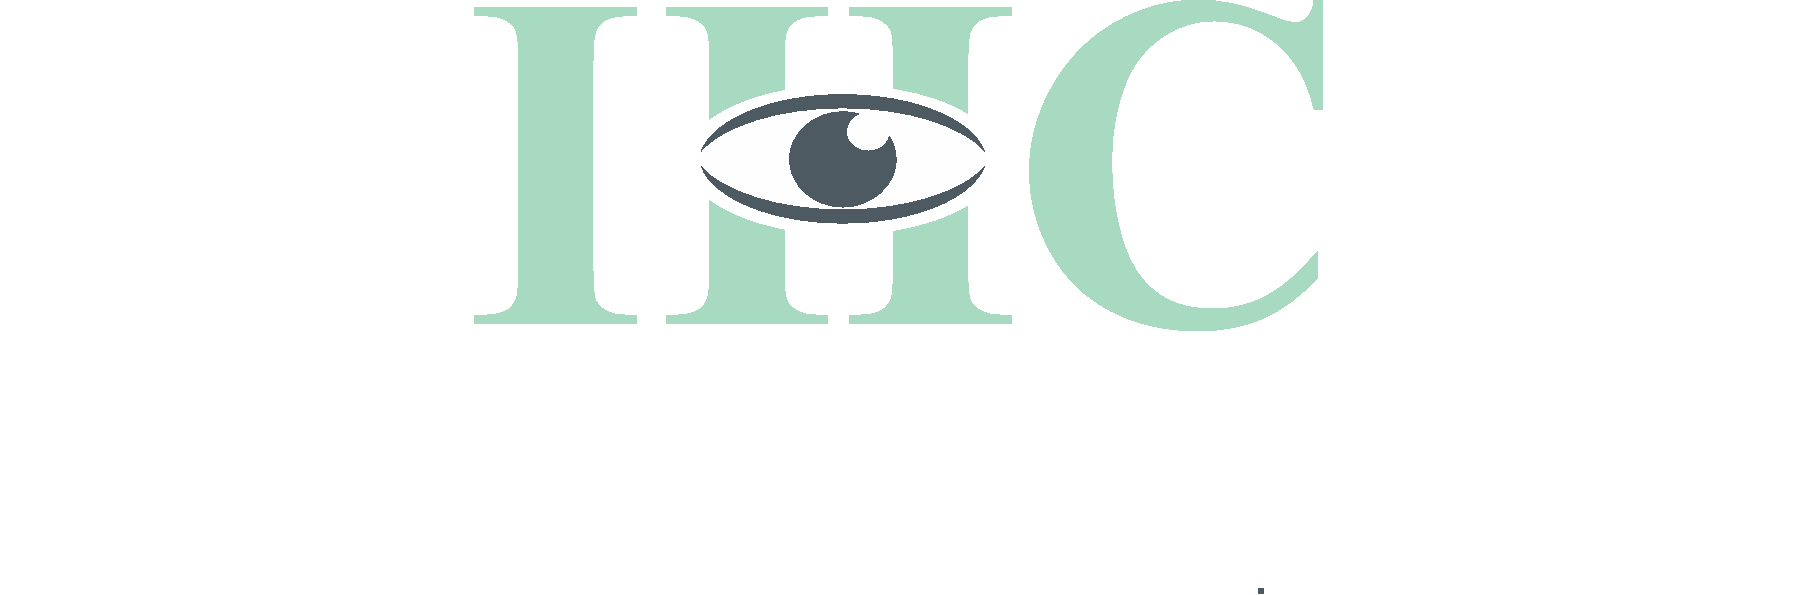 Innocent Hearts Eye Centre Logo